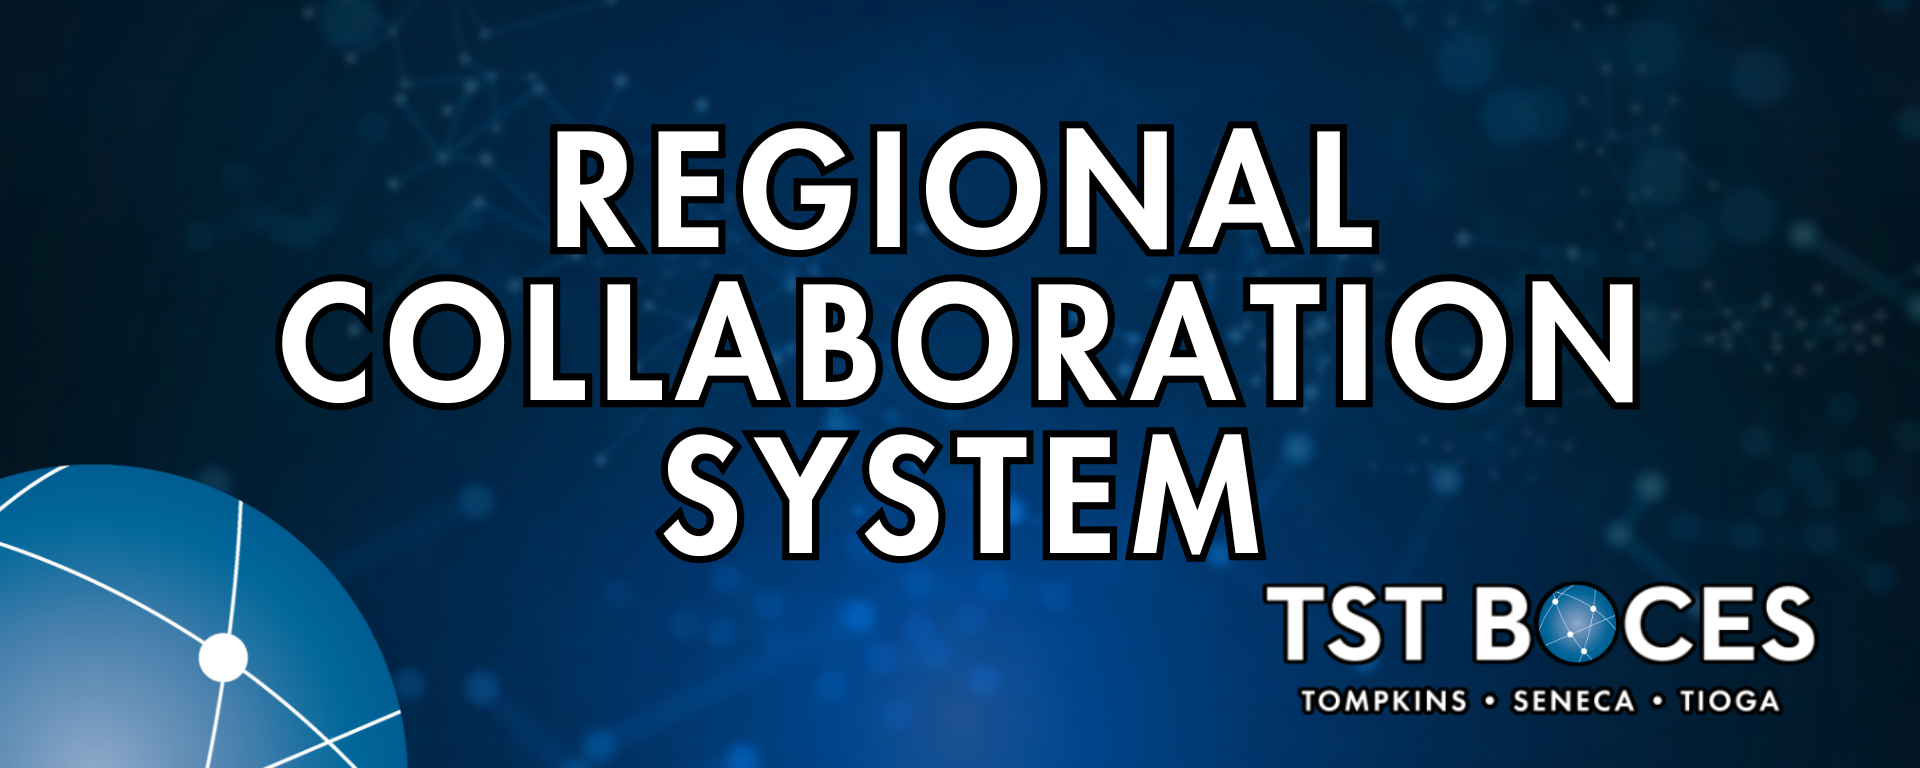 Regional collaboration system banner